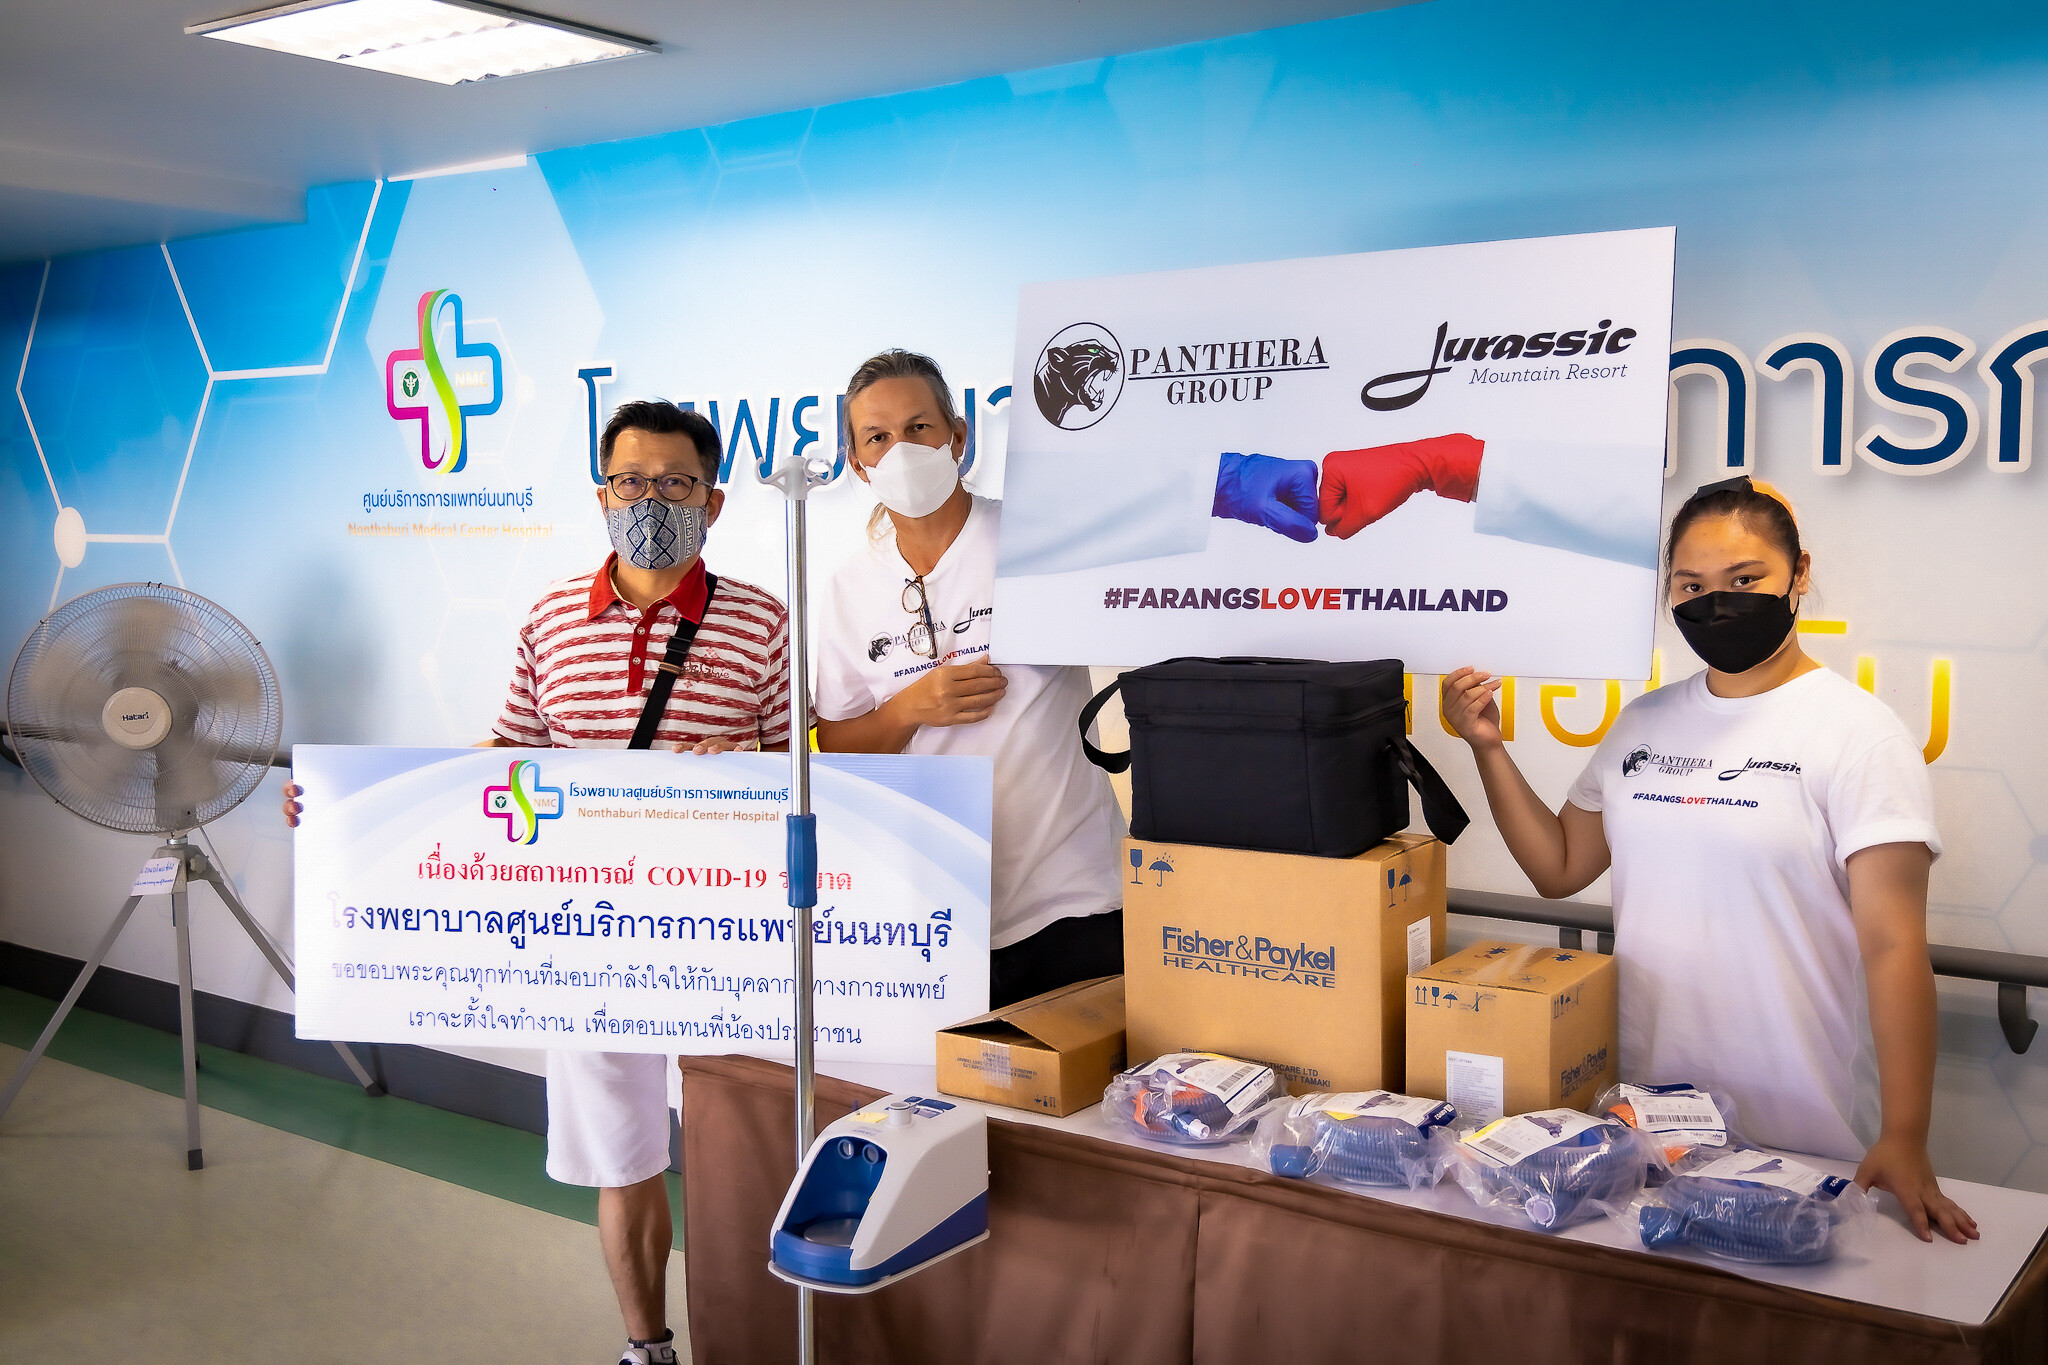 Panthera Group และจูราสสิก รีสอร์ท แอนด์ ฟิชชิ่ง ปาร์ค จับมือพร้อมใจ บริจาคเครื่องช่วยหายใจมูลค่า 2.5 ล้านบาท ให้กับวอร์ดผู้ติดเชื้อโควิด-19 ตามโรงพยาบาลต่าง ๆ ทั่วไทย